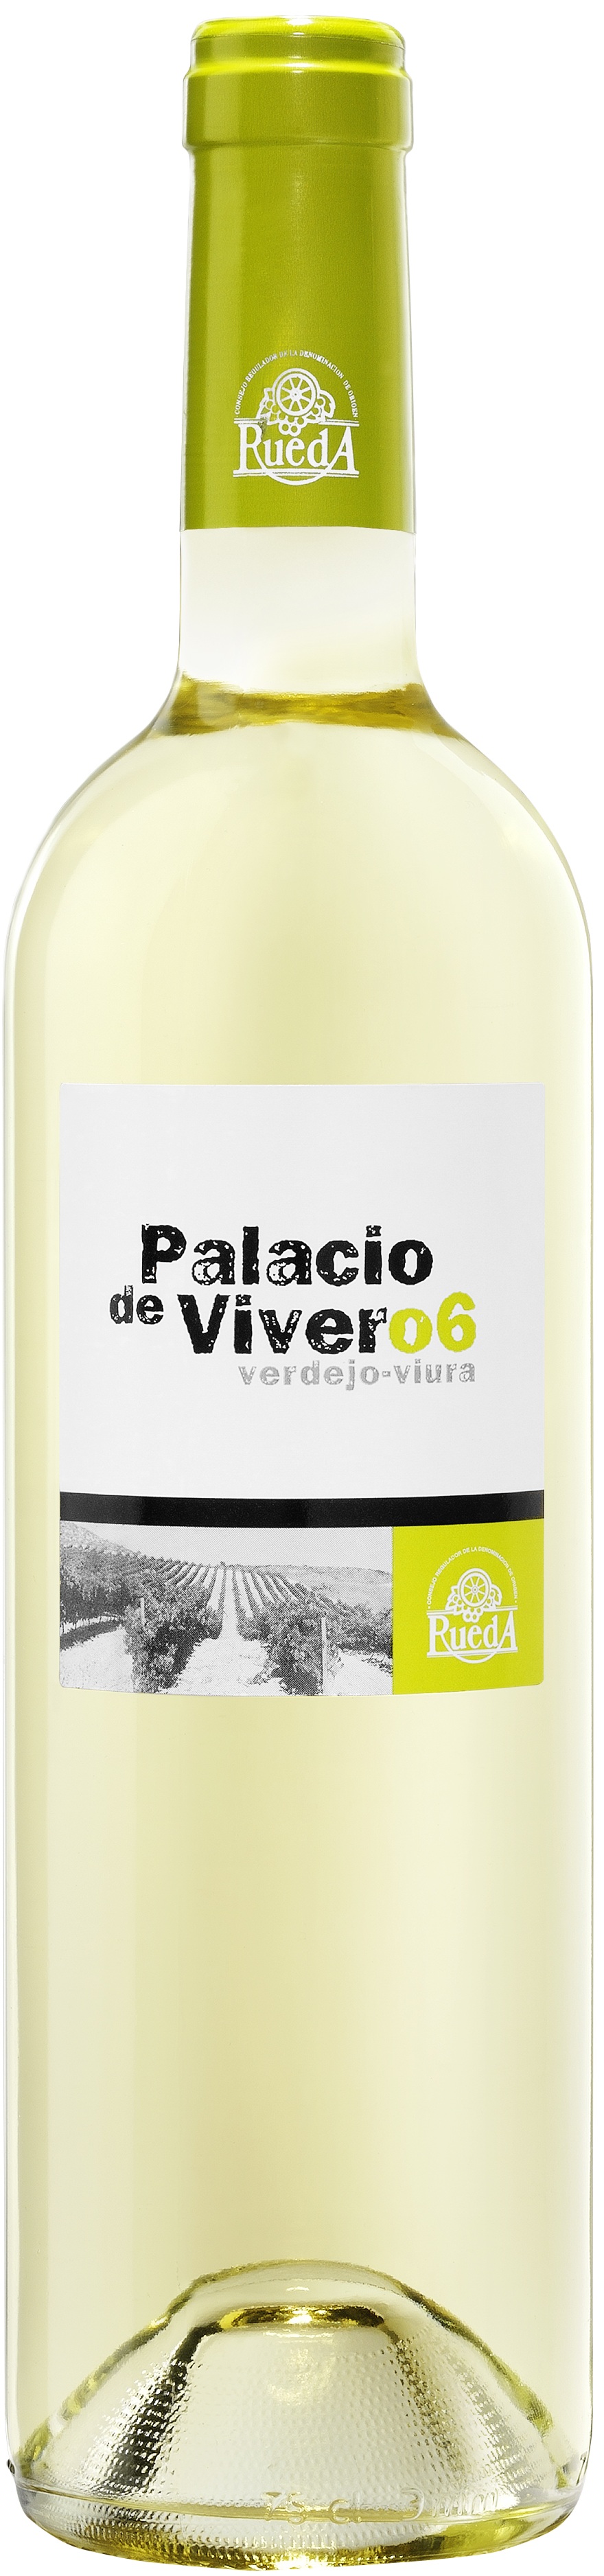 Image of Wine bottle Palacio de Vivero Rueda